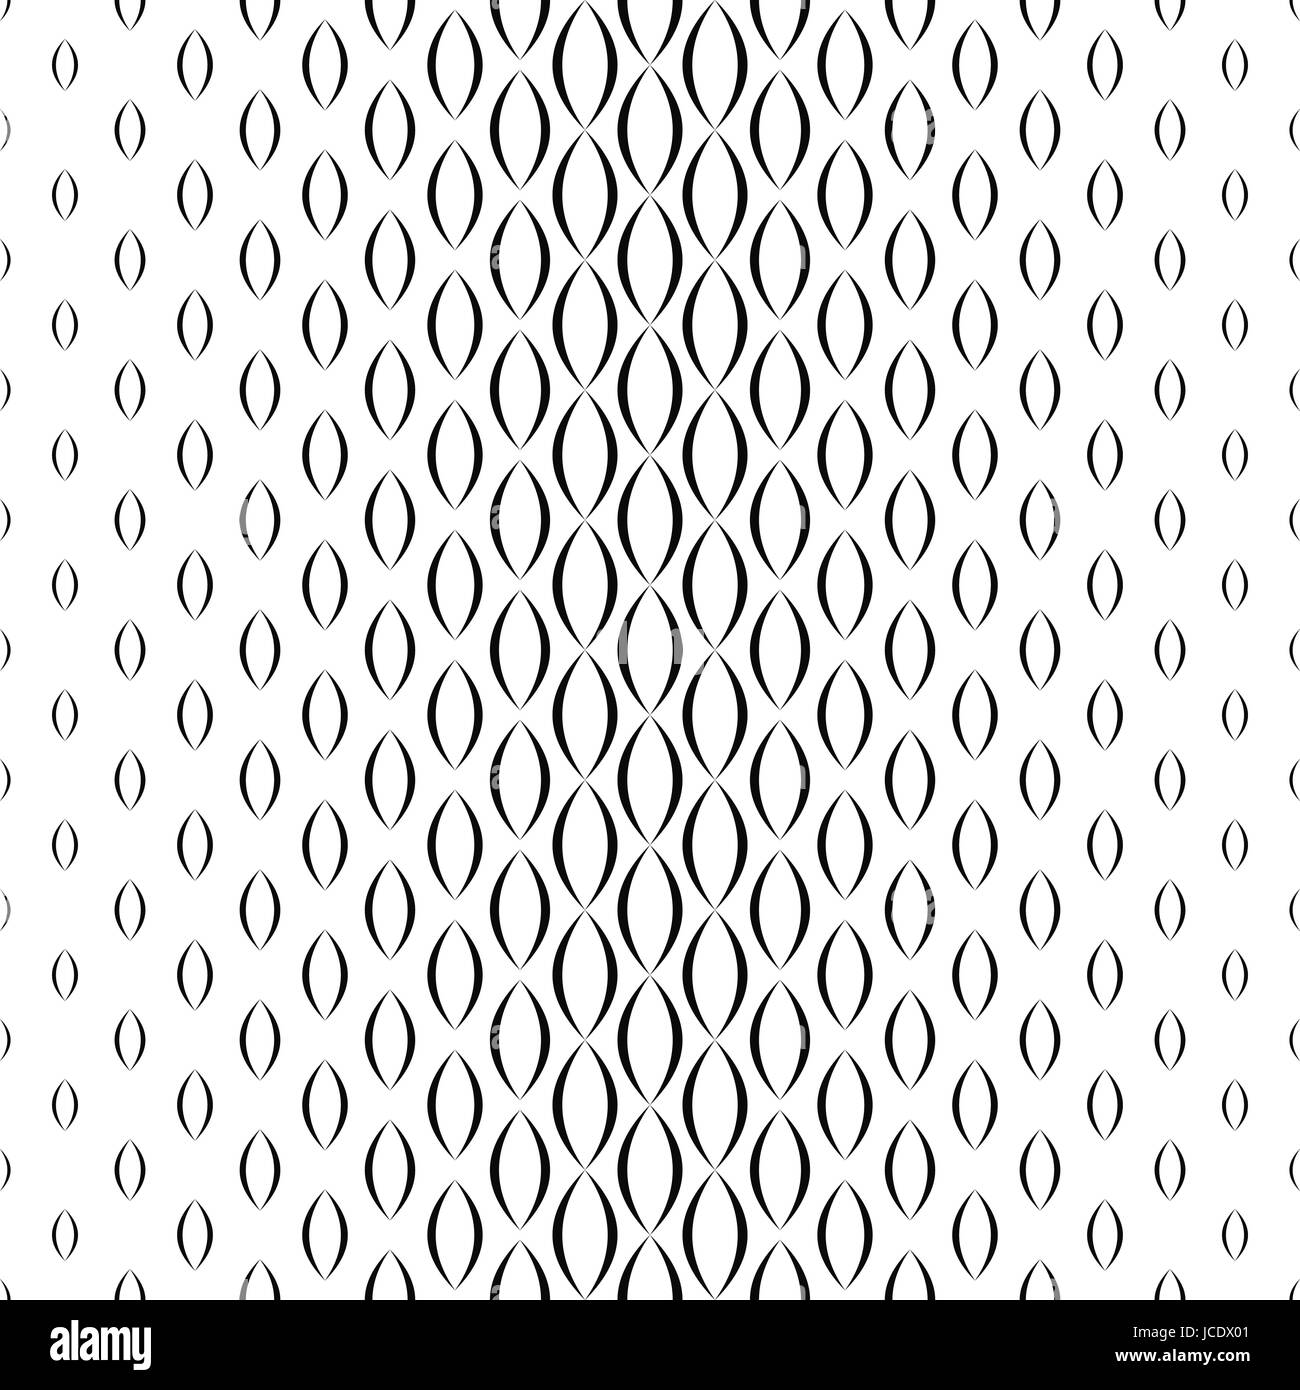 Schwarz / weiß vertikal gebogene Form Muster Stock Vektor